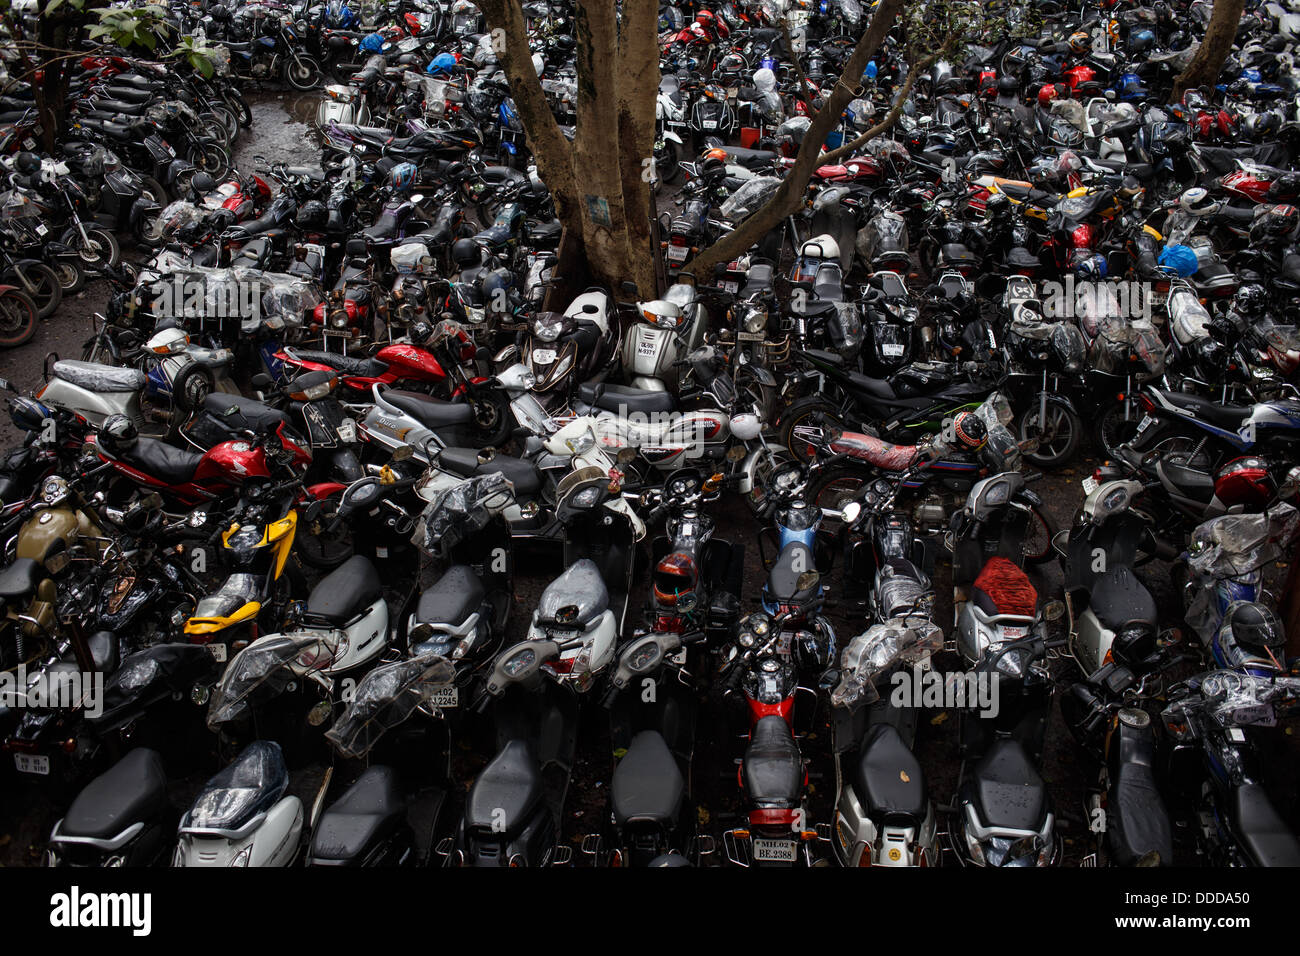 A packed motorcycle motorbike parking lot outside suburban Kandivali train station in Mumbai, India. Stock Photo